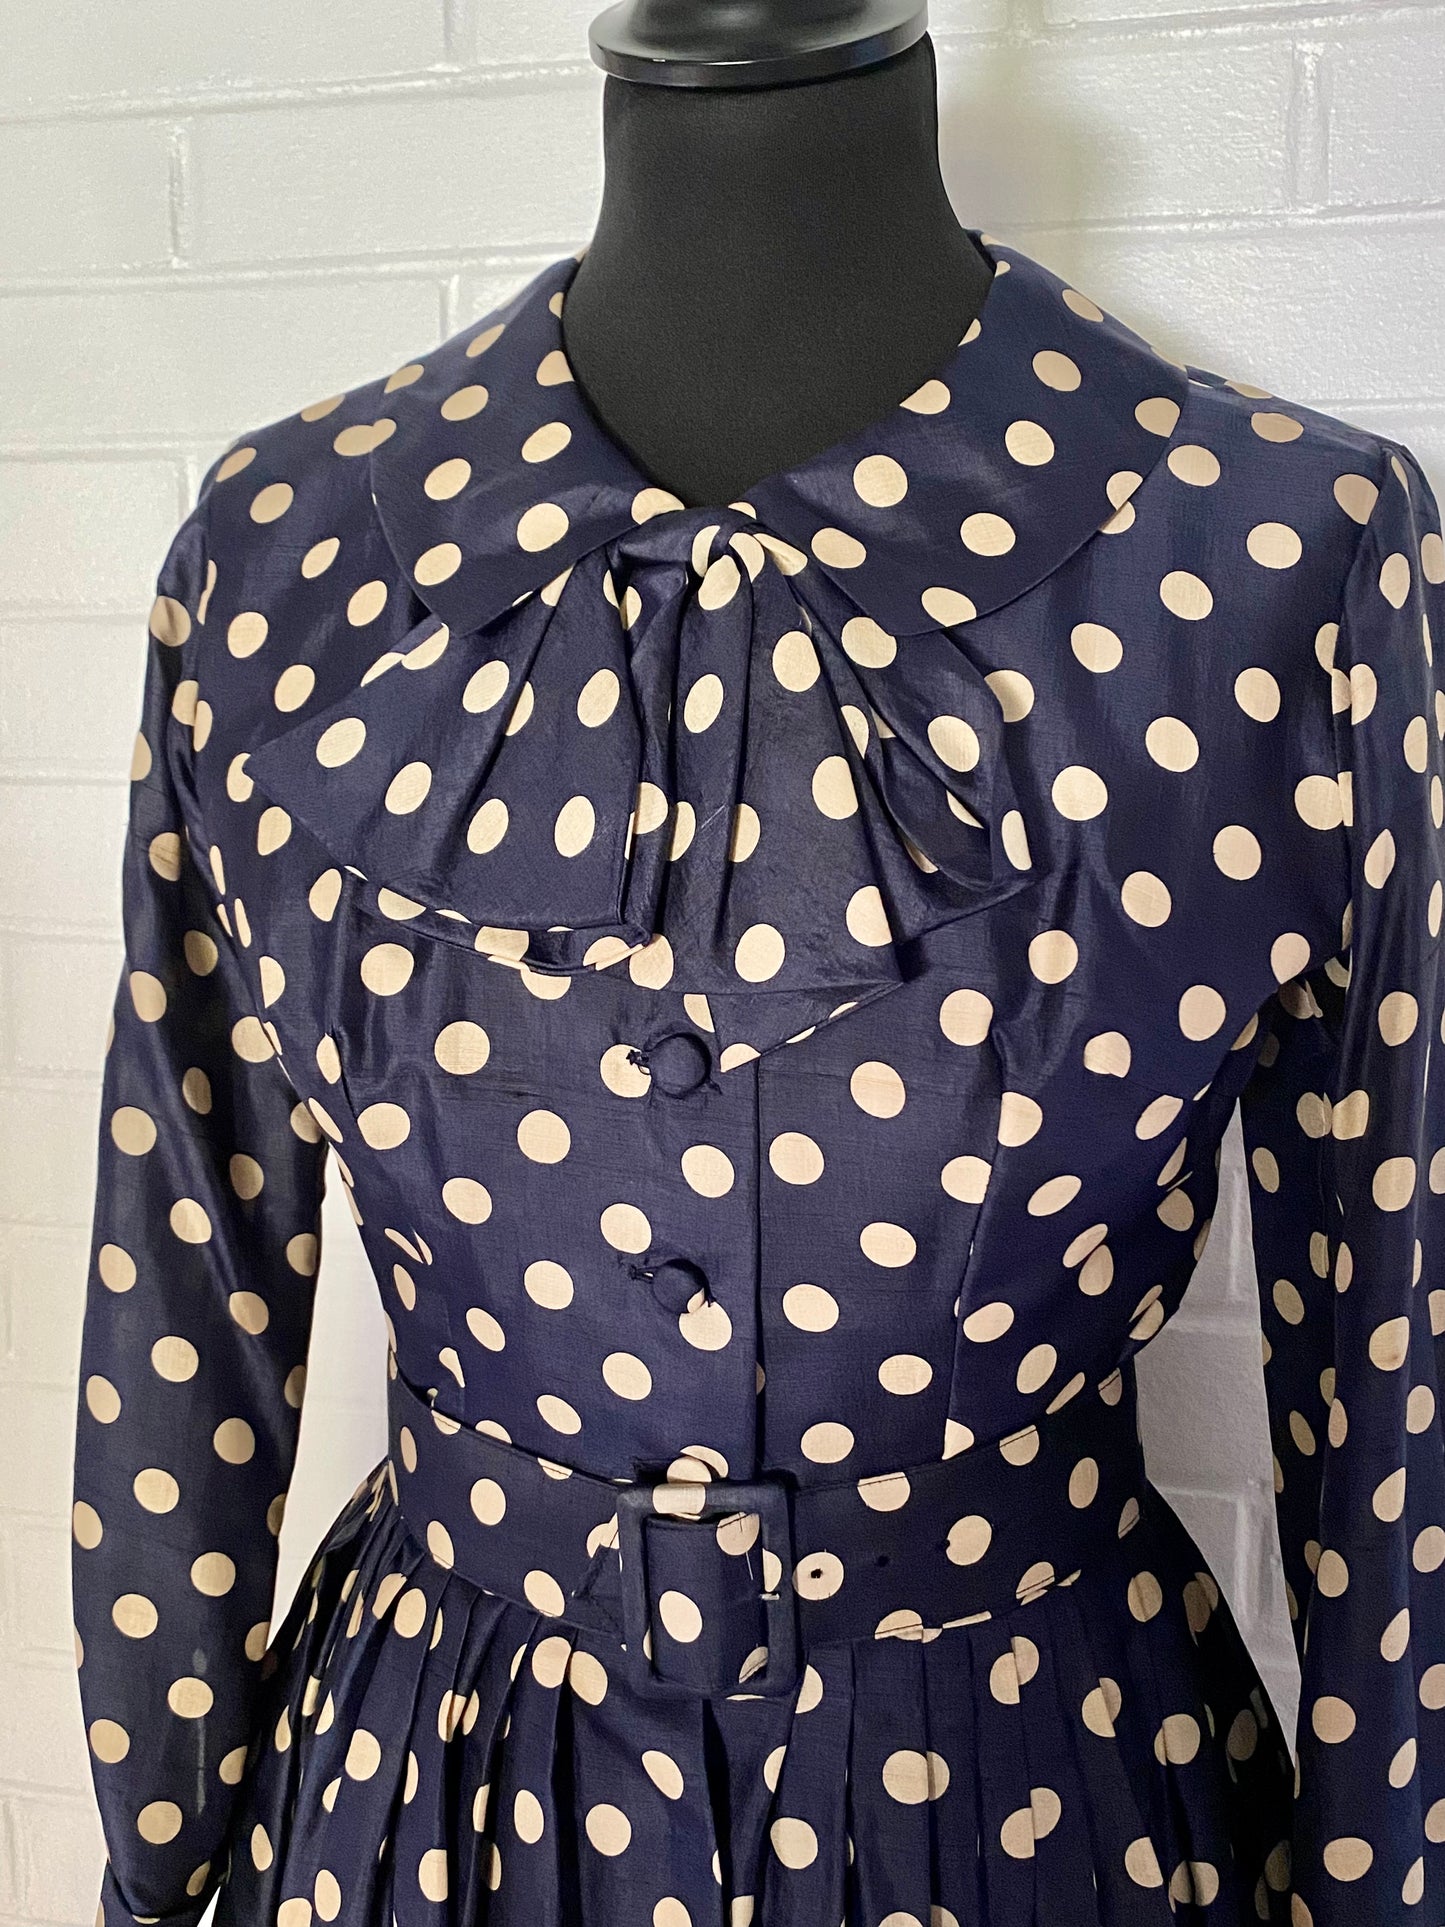 Late 50s/ Early 60s Navy & Tan Polka Dot Silk Dress